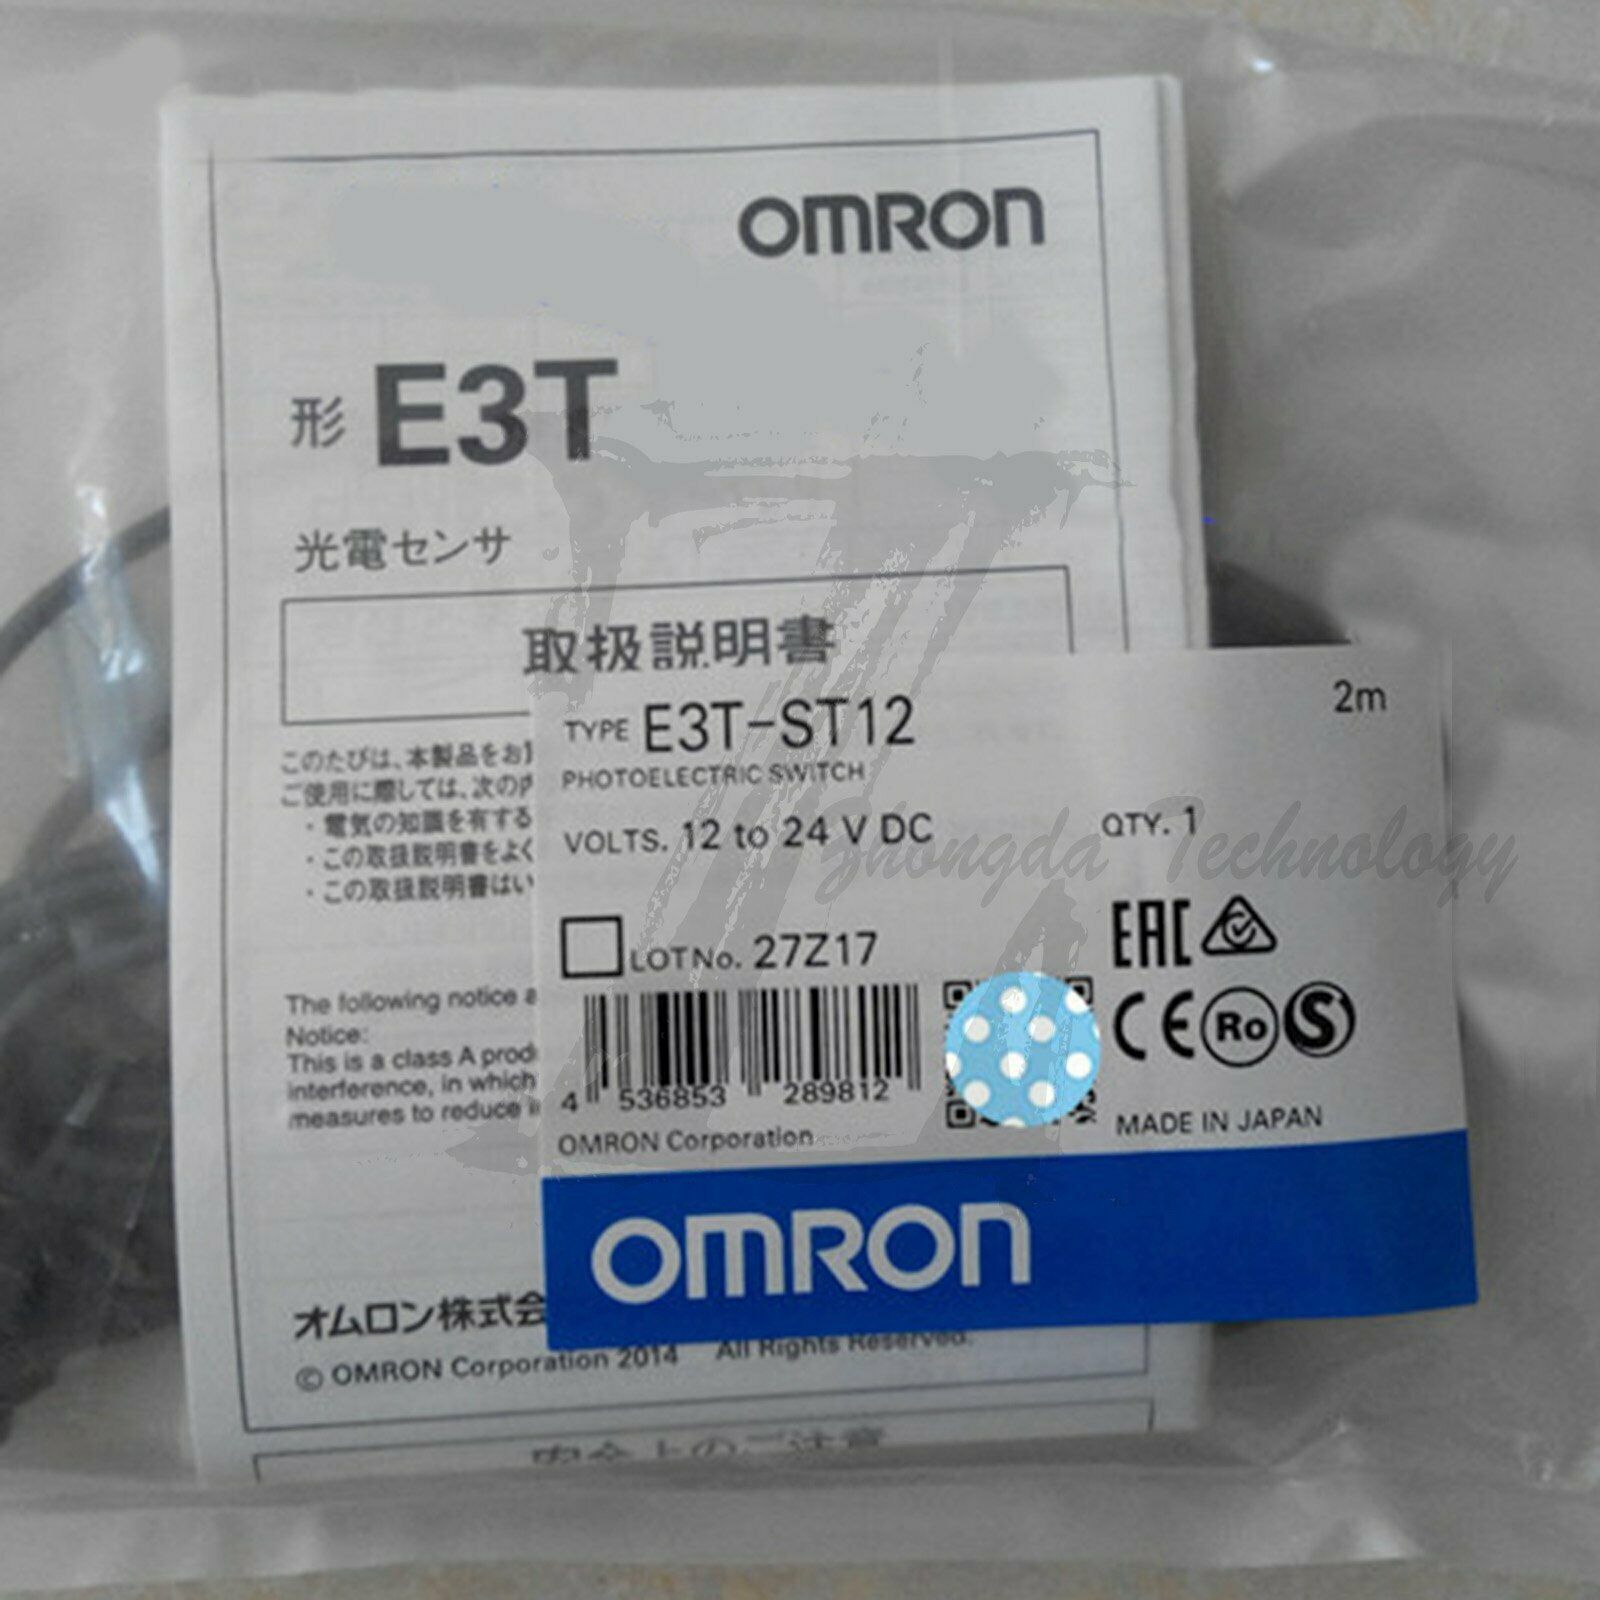 NEW Omron photoelectric sensor E3T-ST12 quality assurance